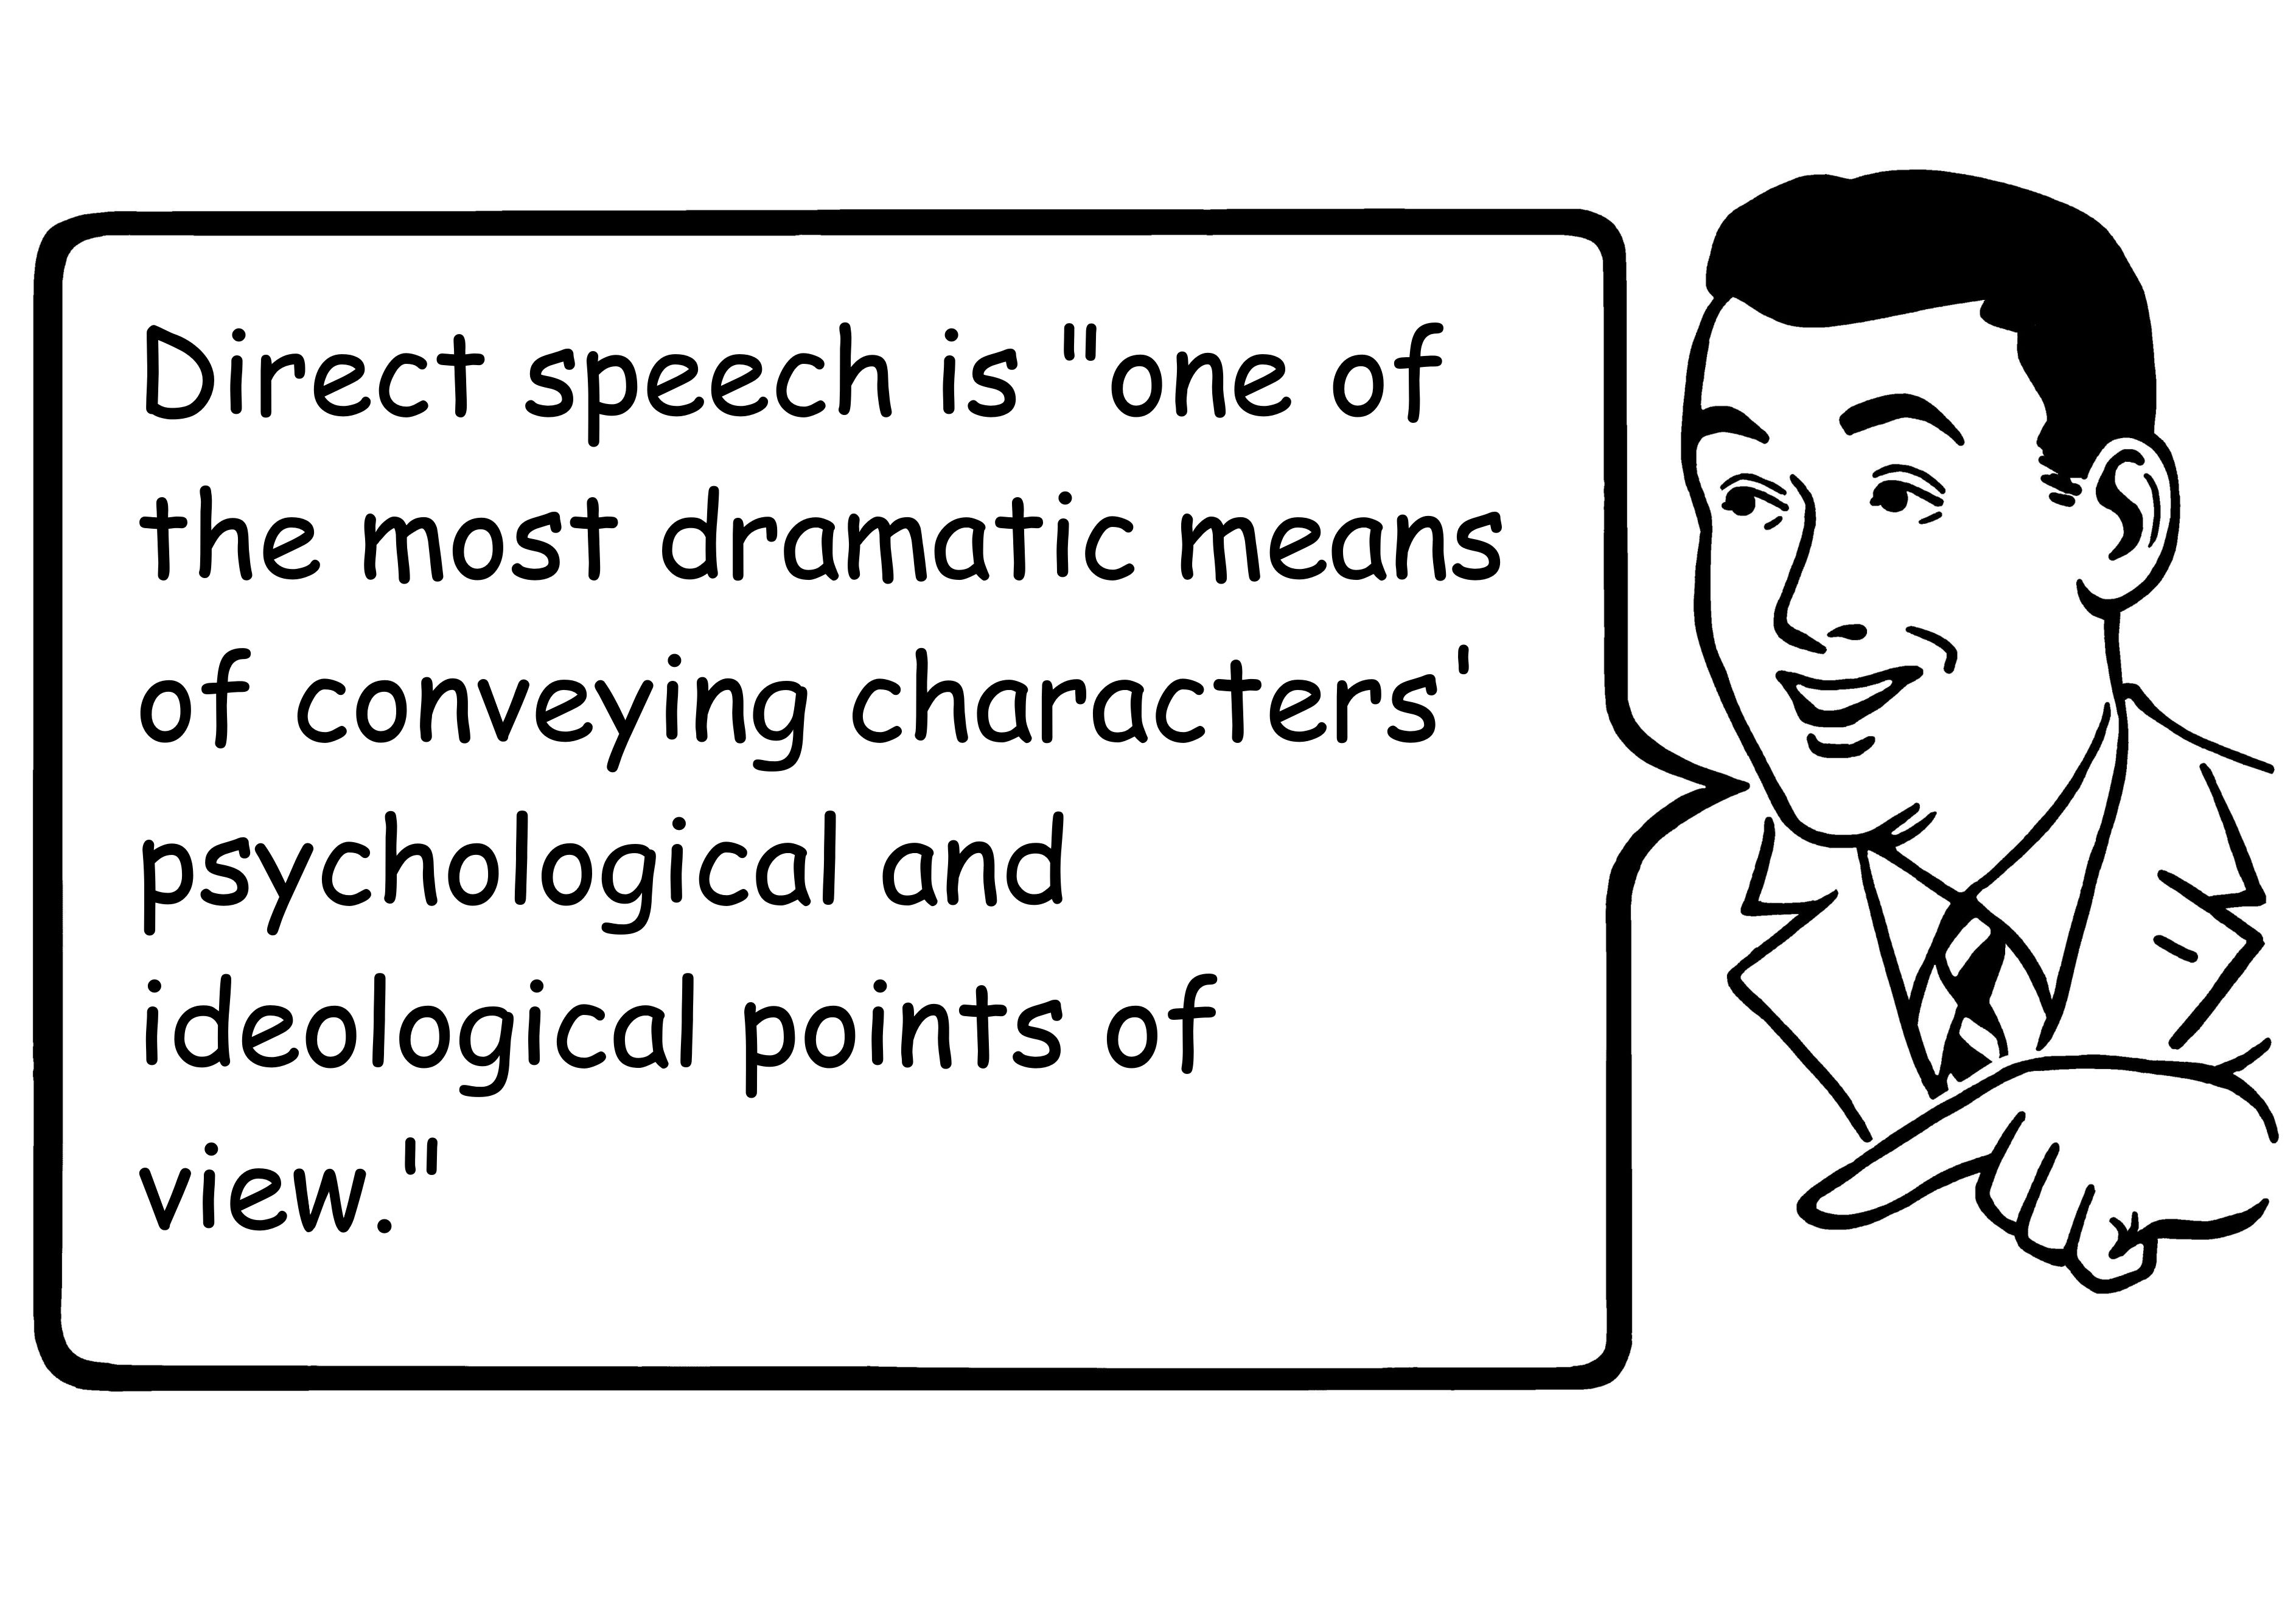 speech definition